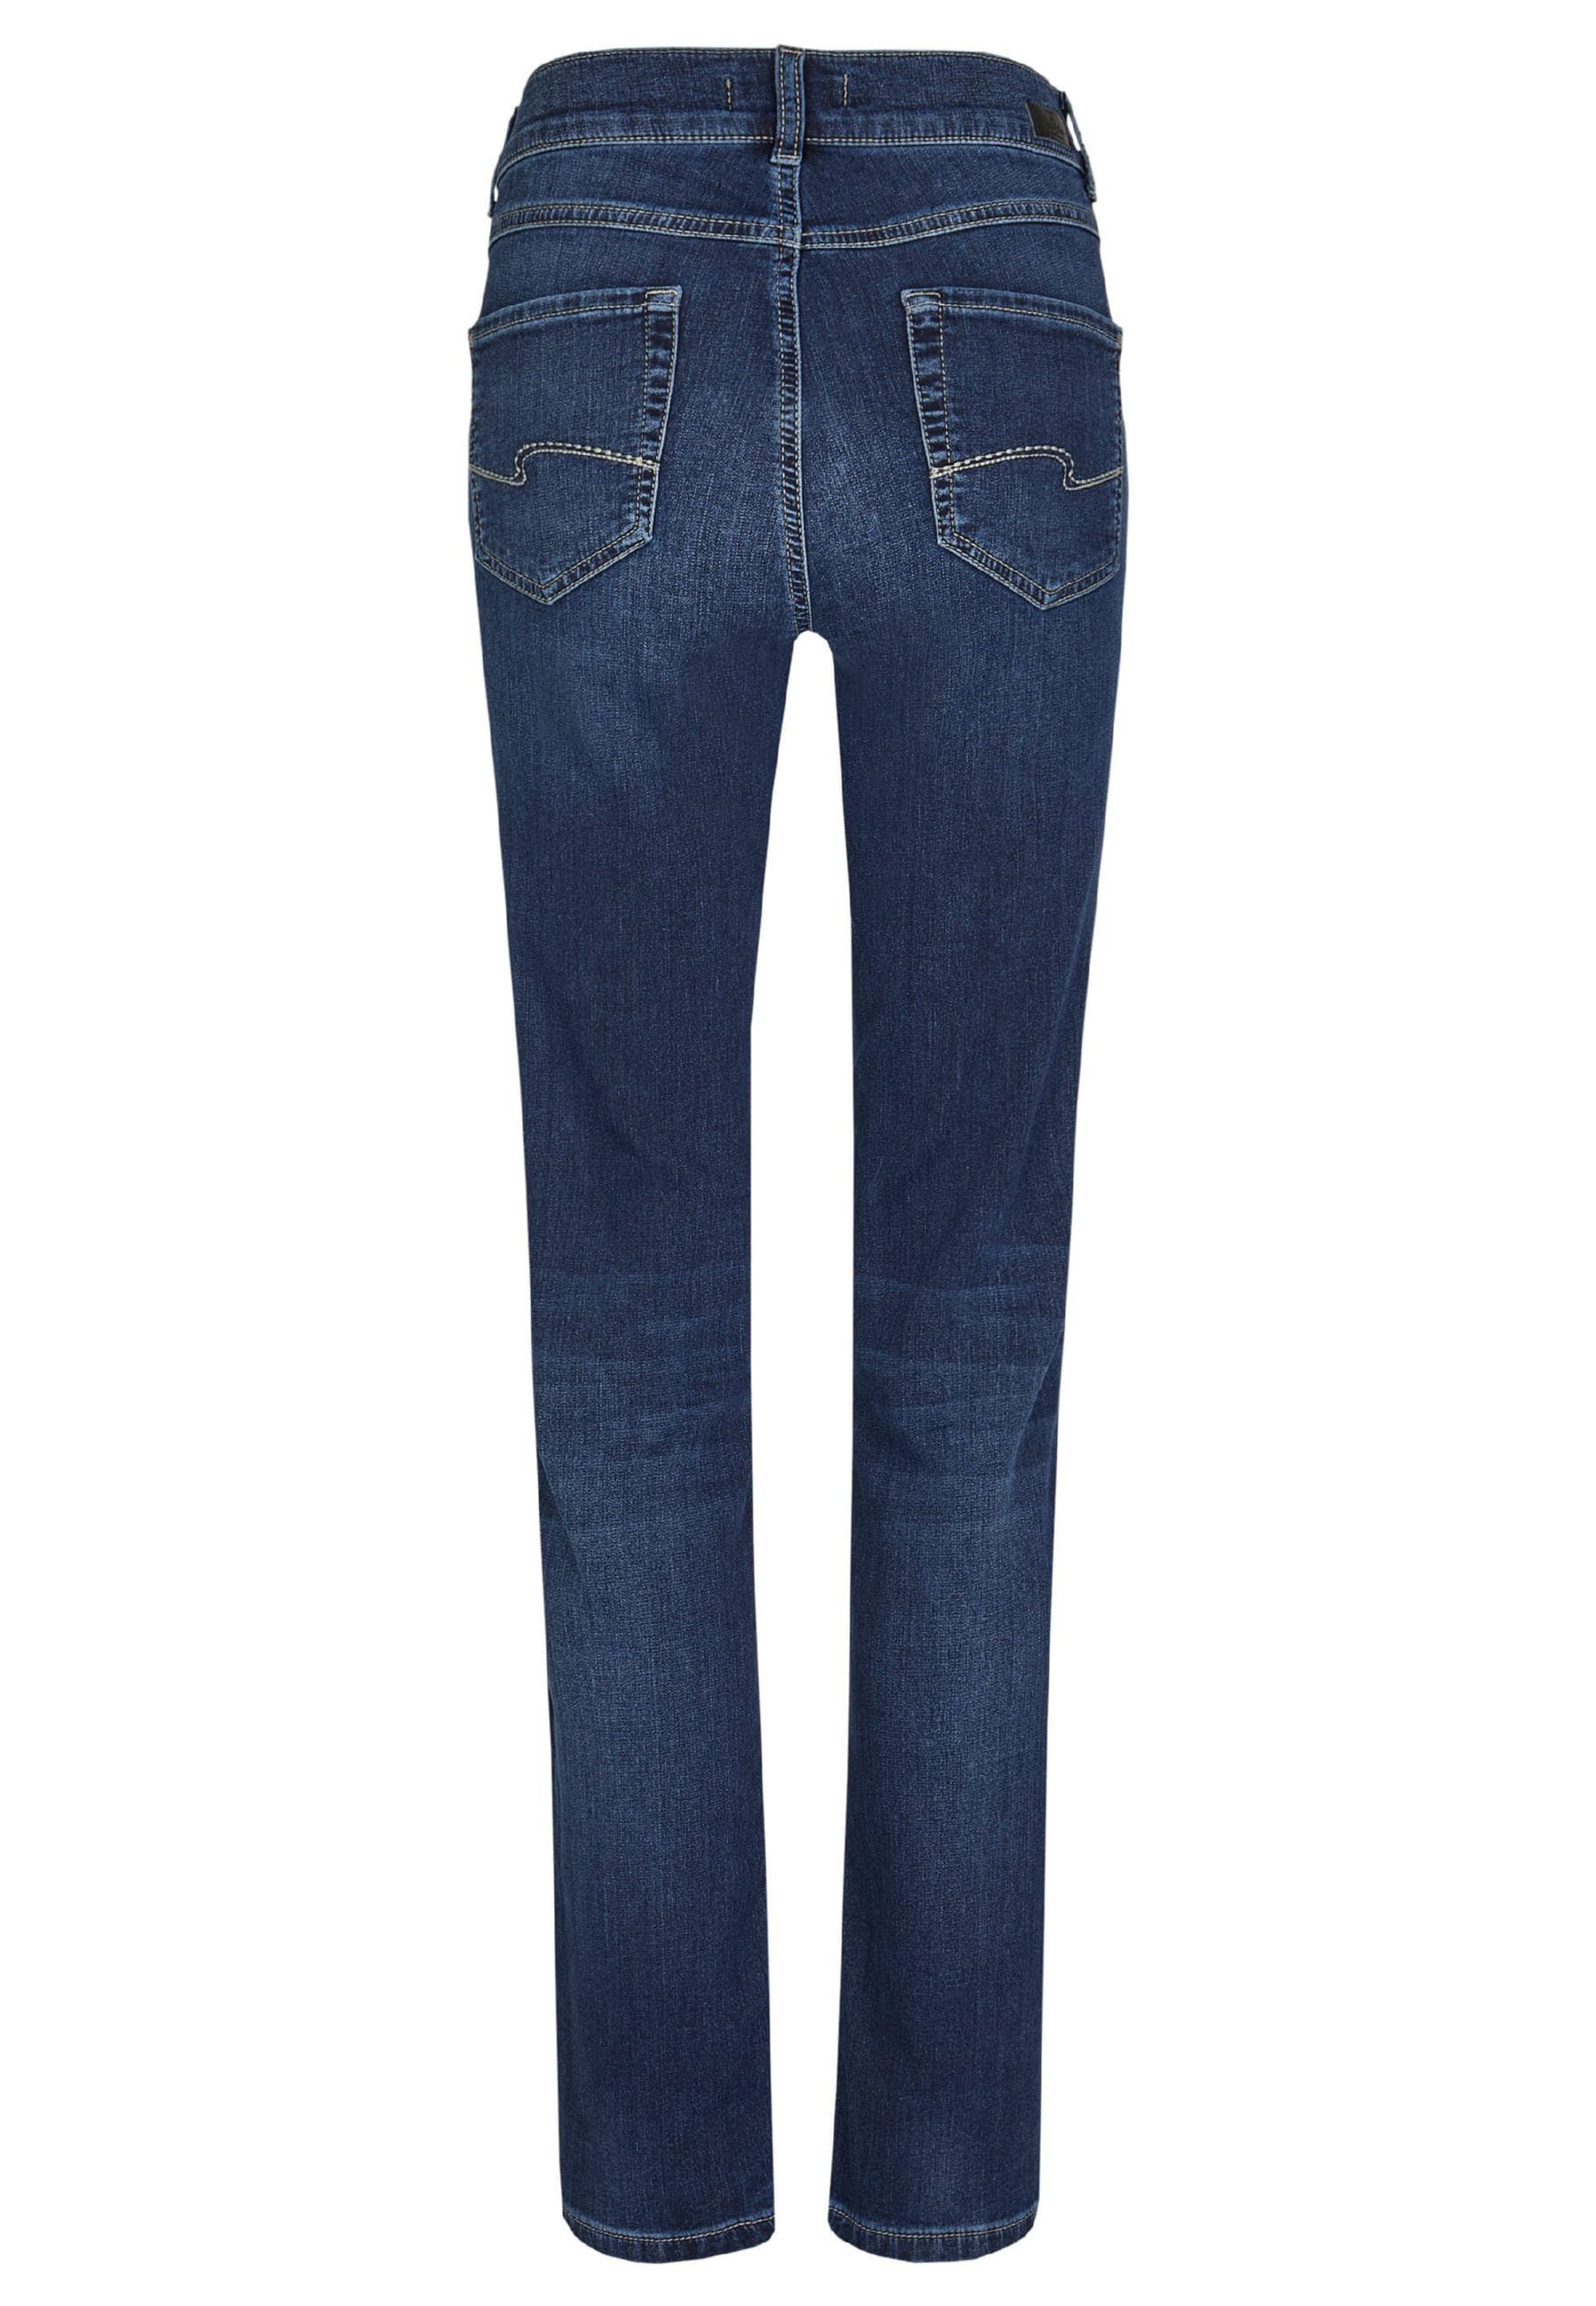 Jerseyoptik Jeans ANGELS mit Cici Sweat in Denim Label-Applikationen Straight-Jeans mit